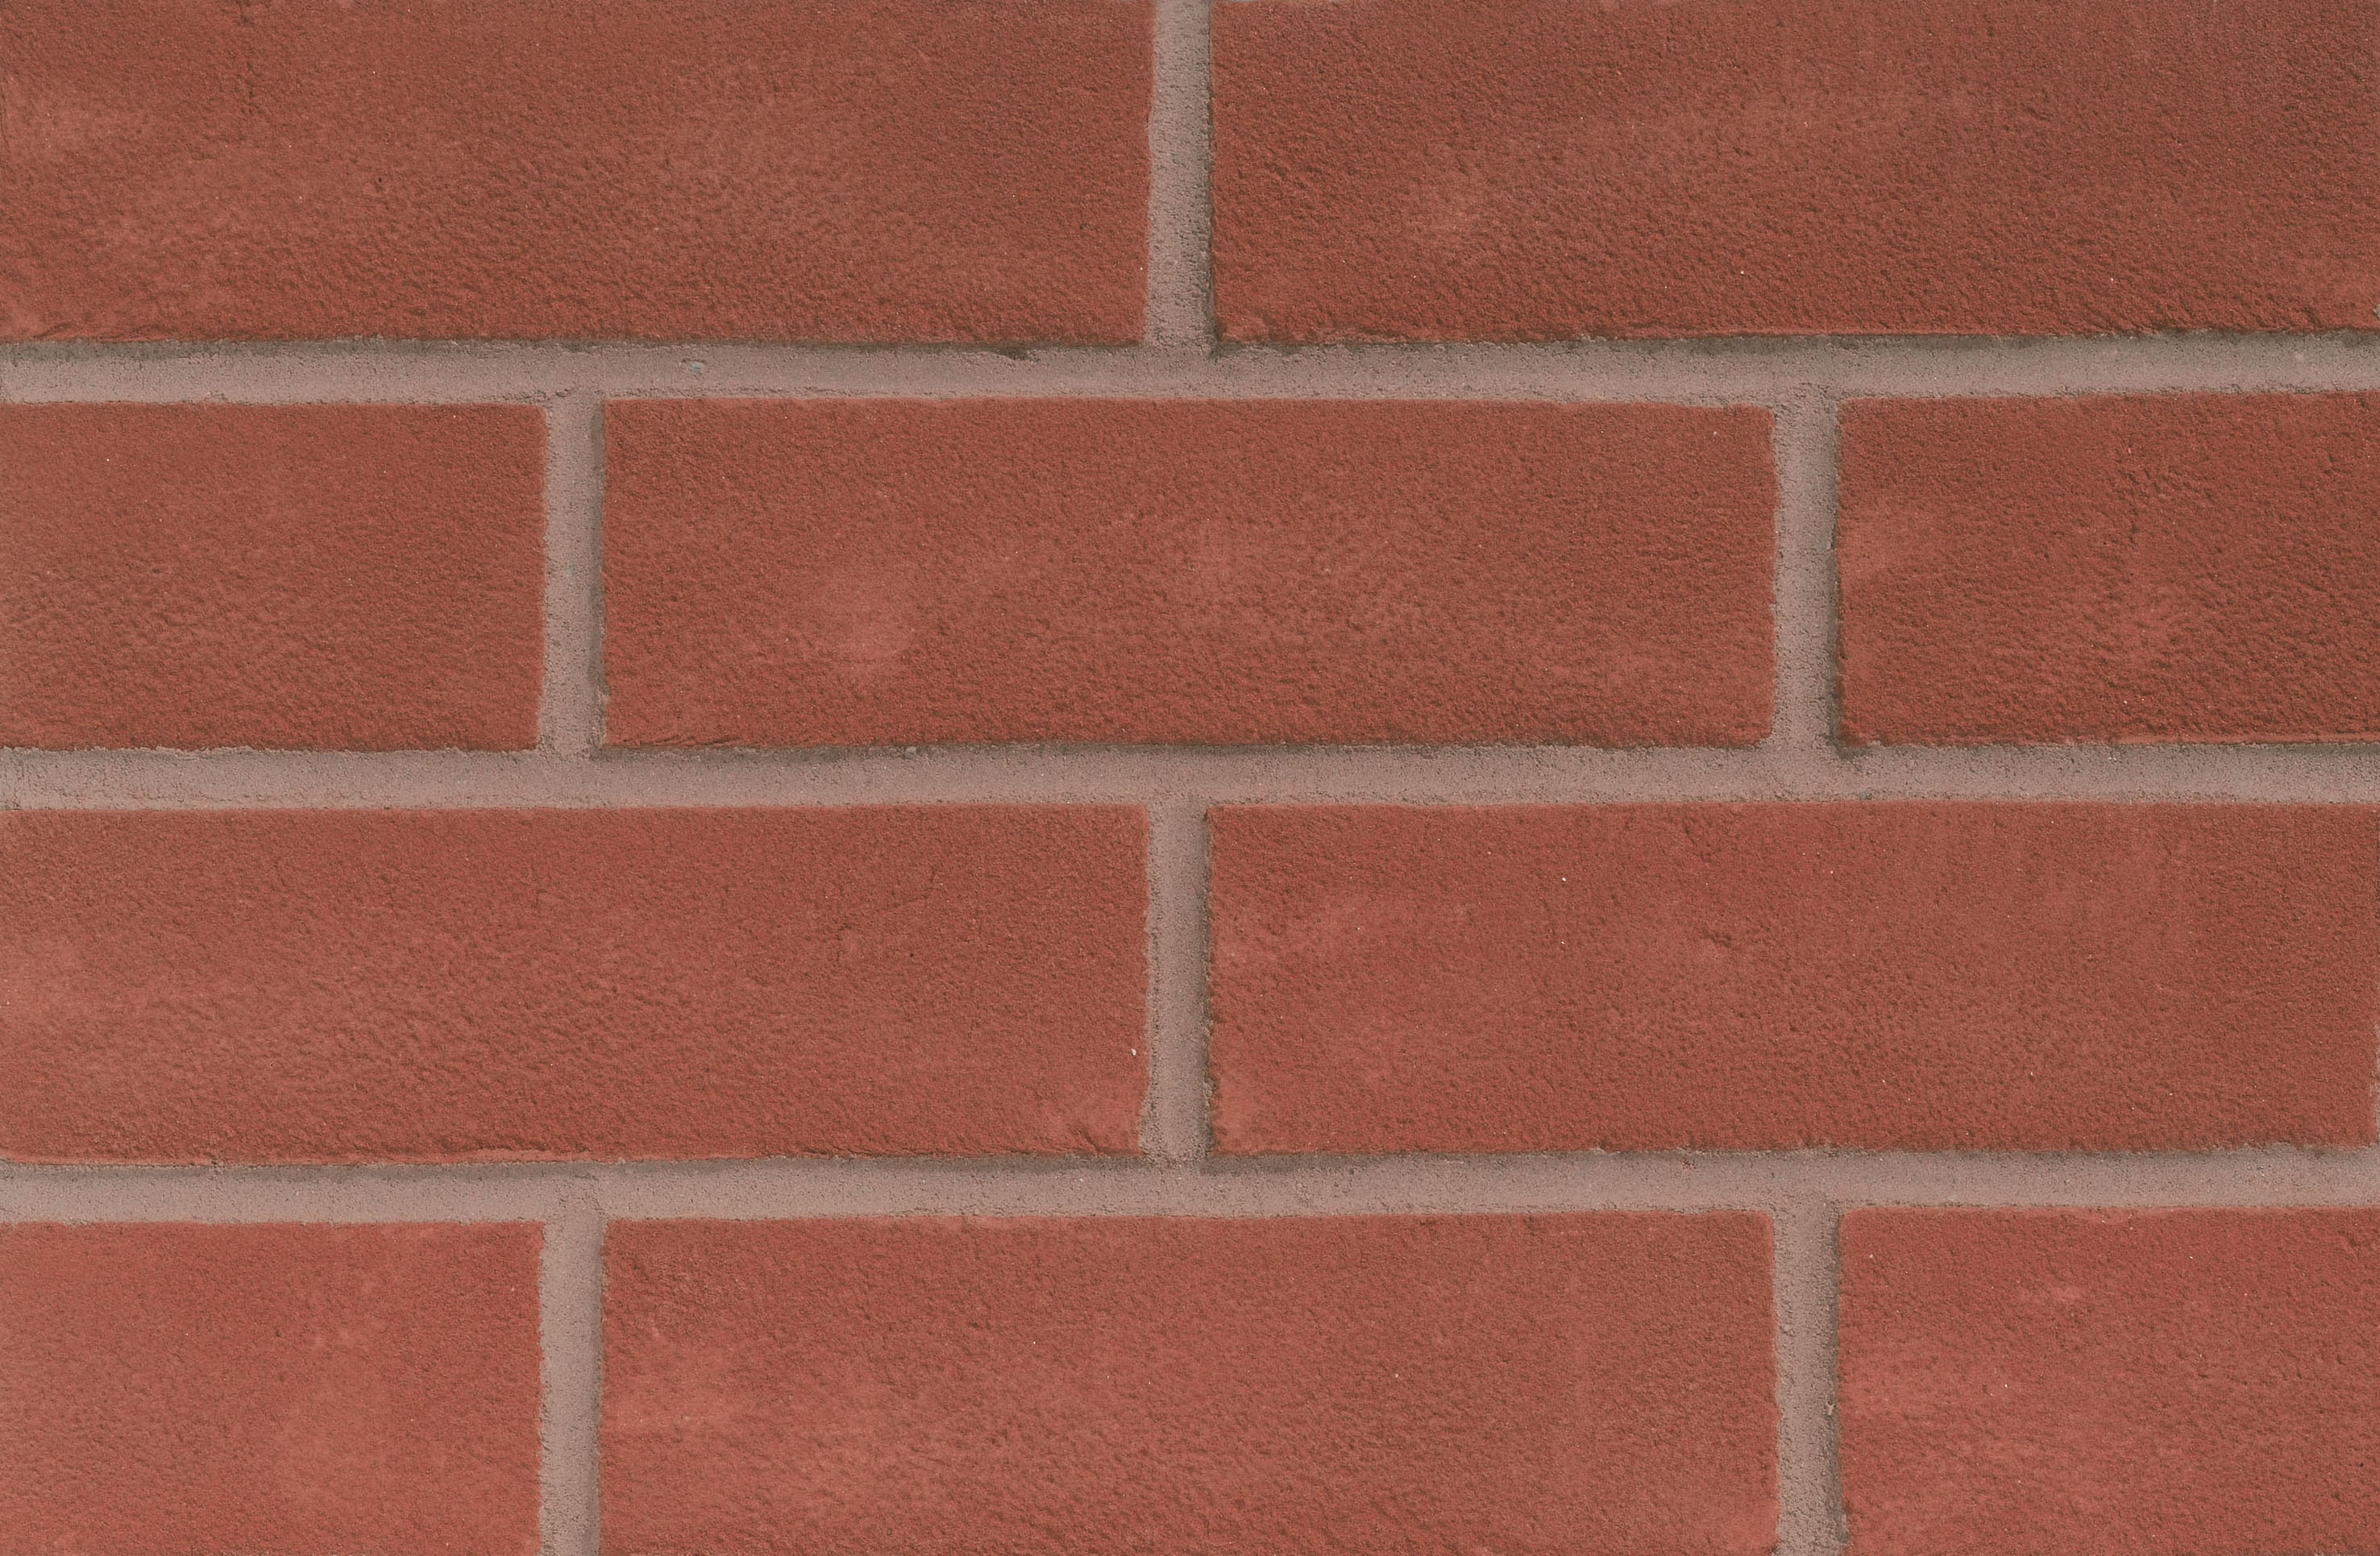 Atherstone Red Stock Pressed Brick - Forterra